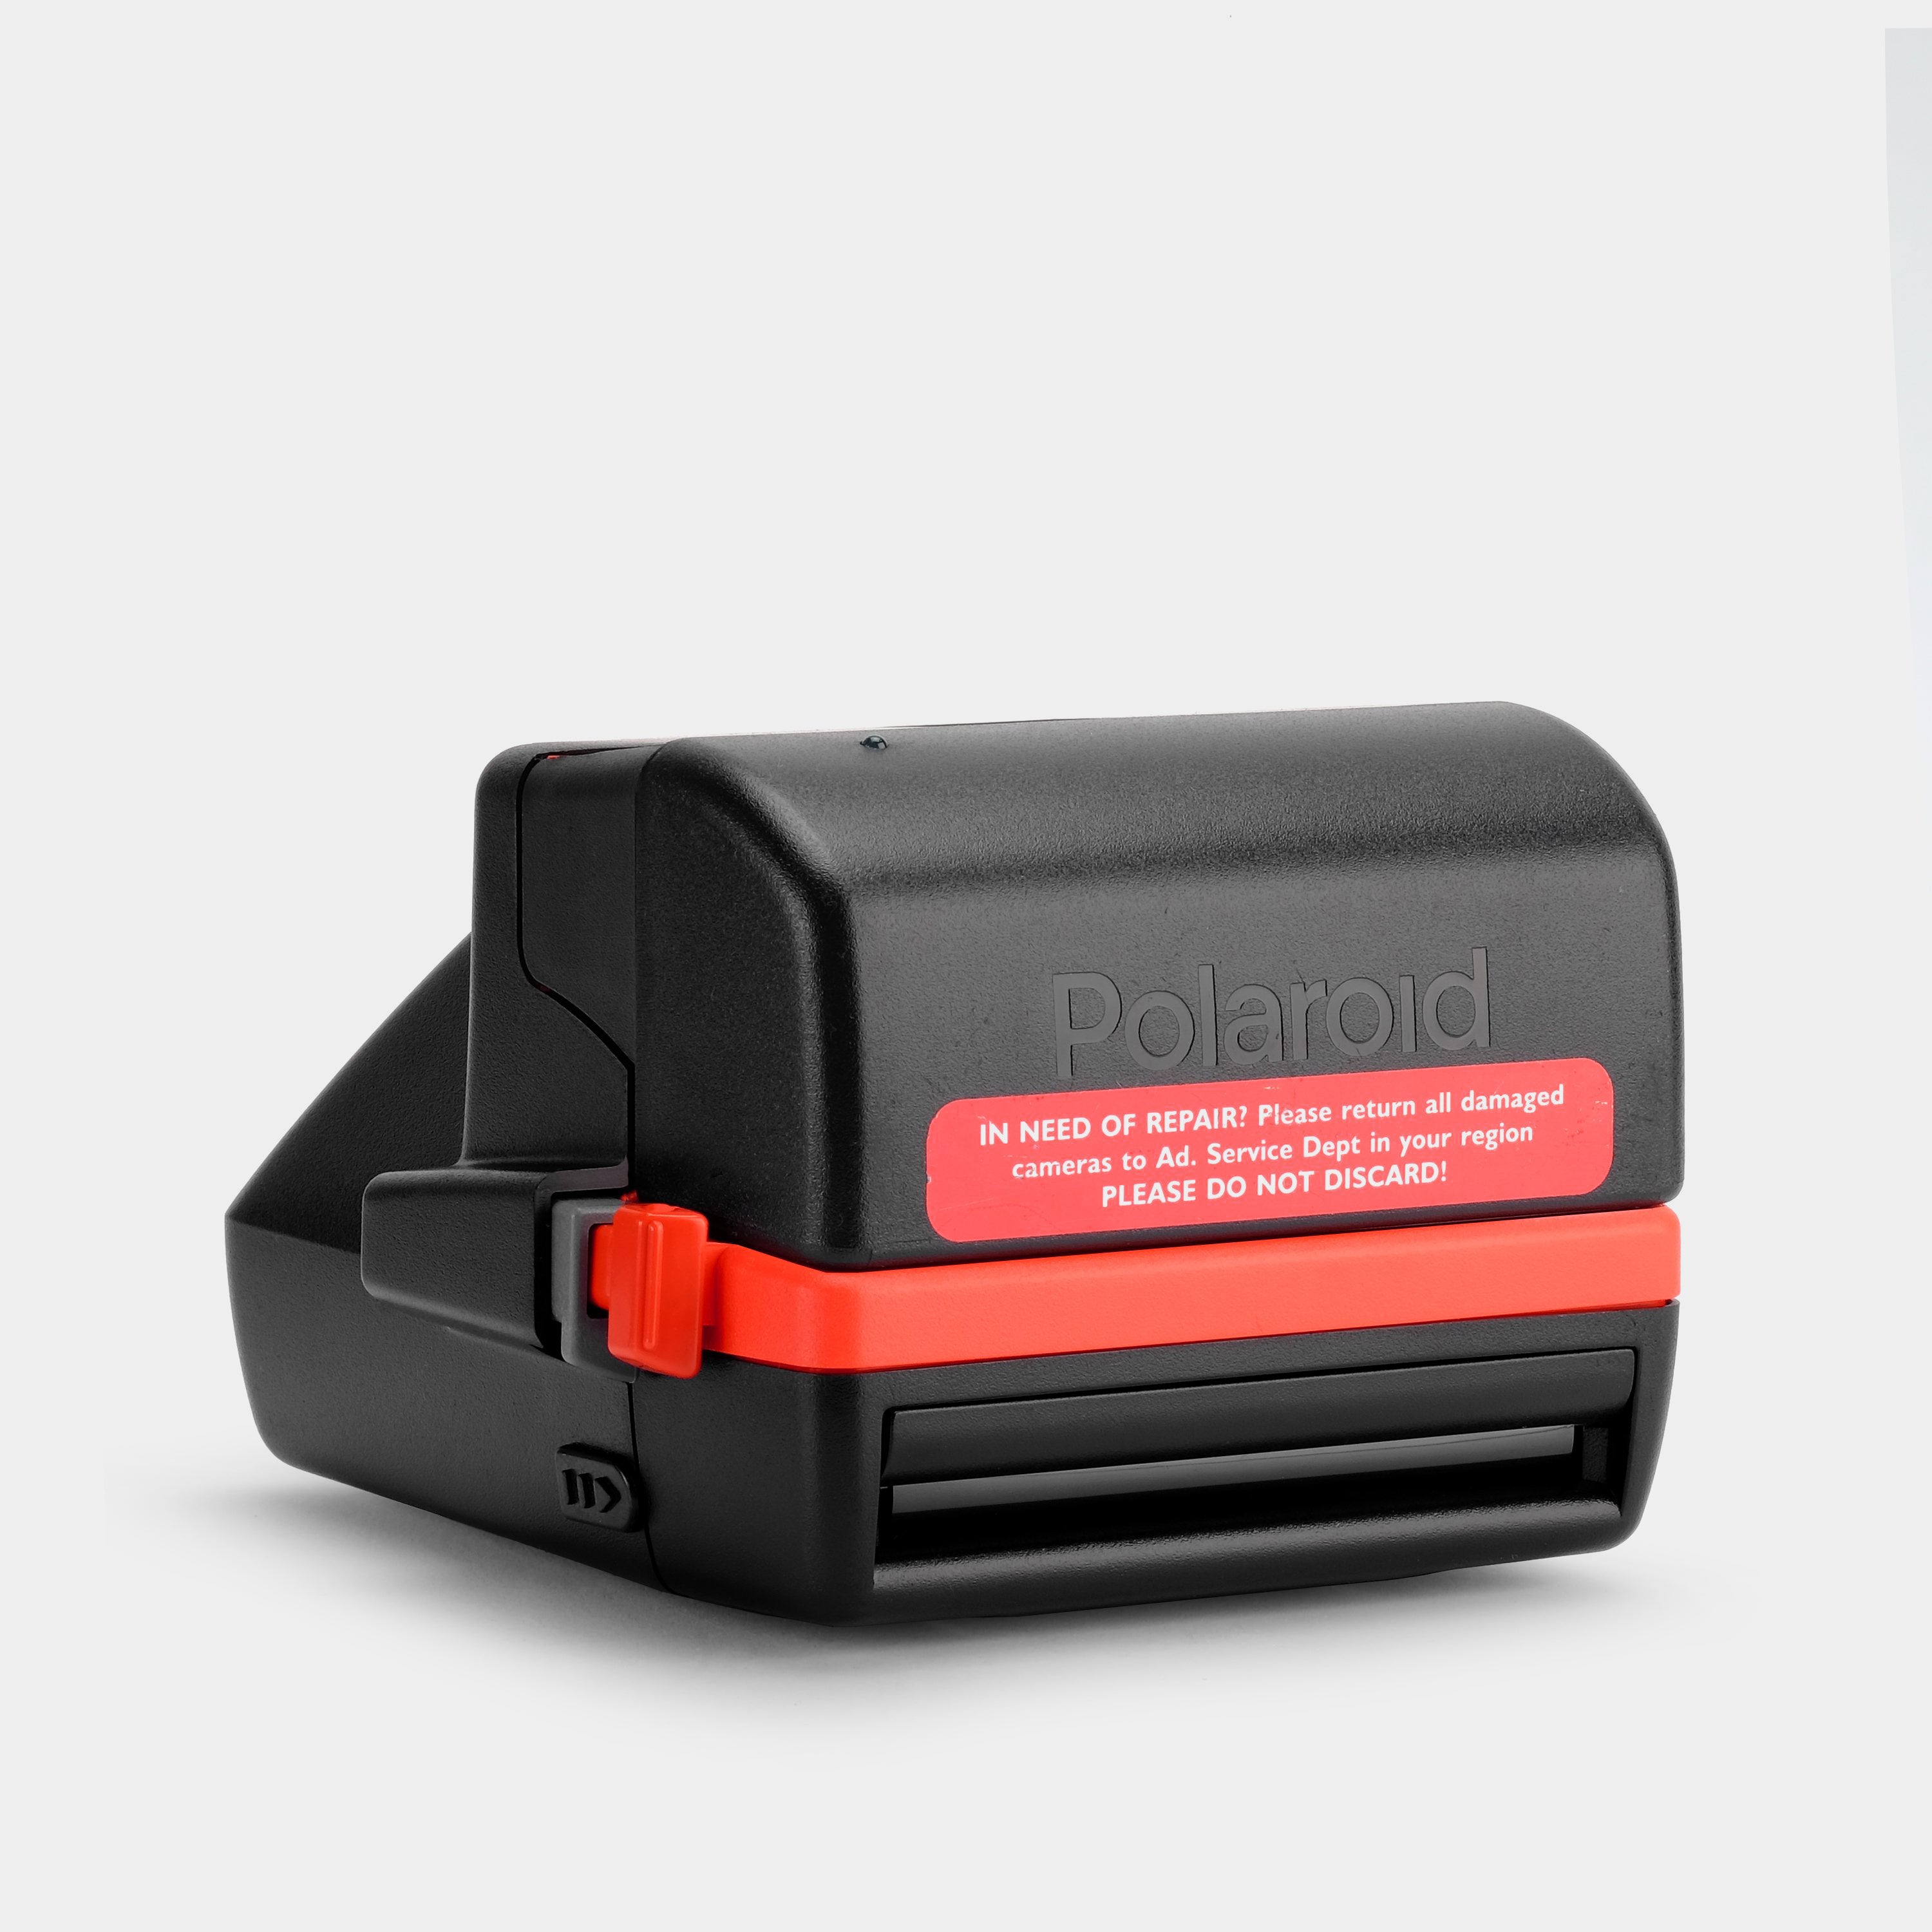 Polaroid 600 State Farm Insurance Red Instant Film Camera